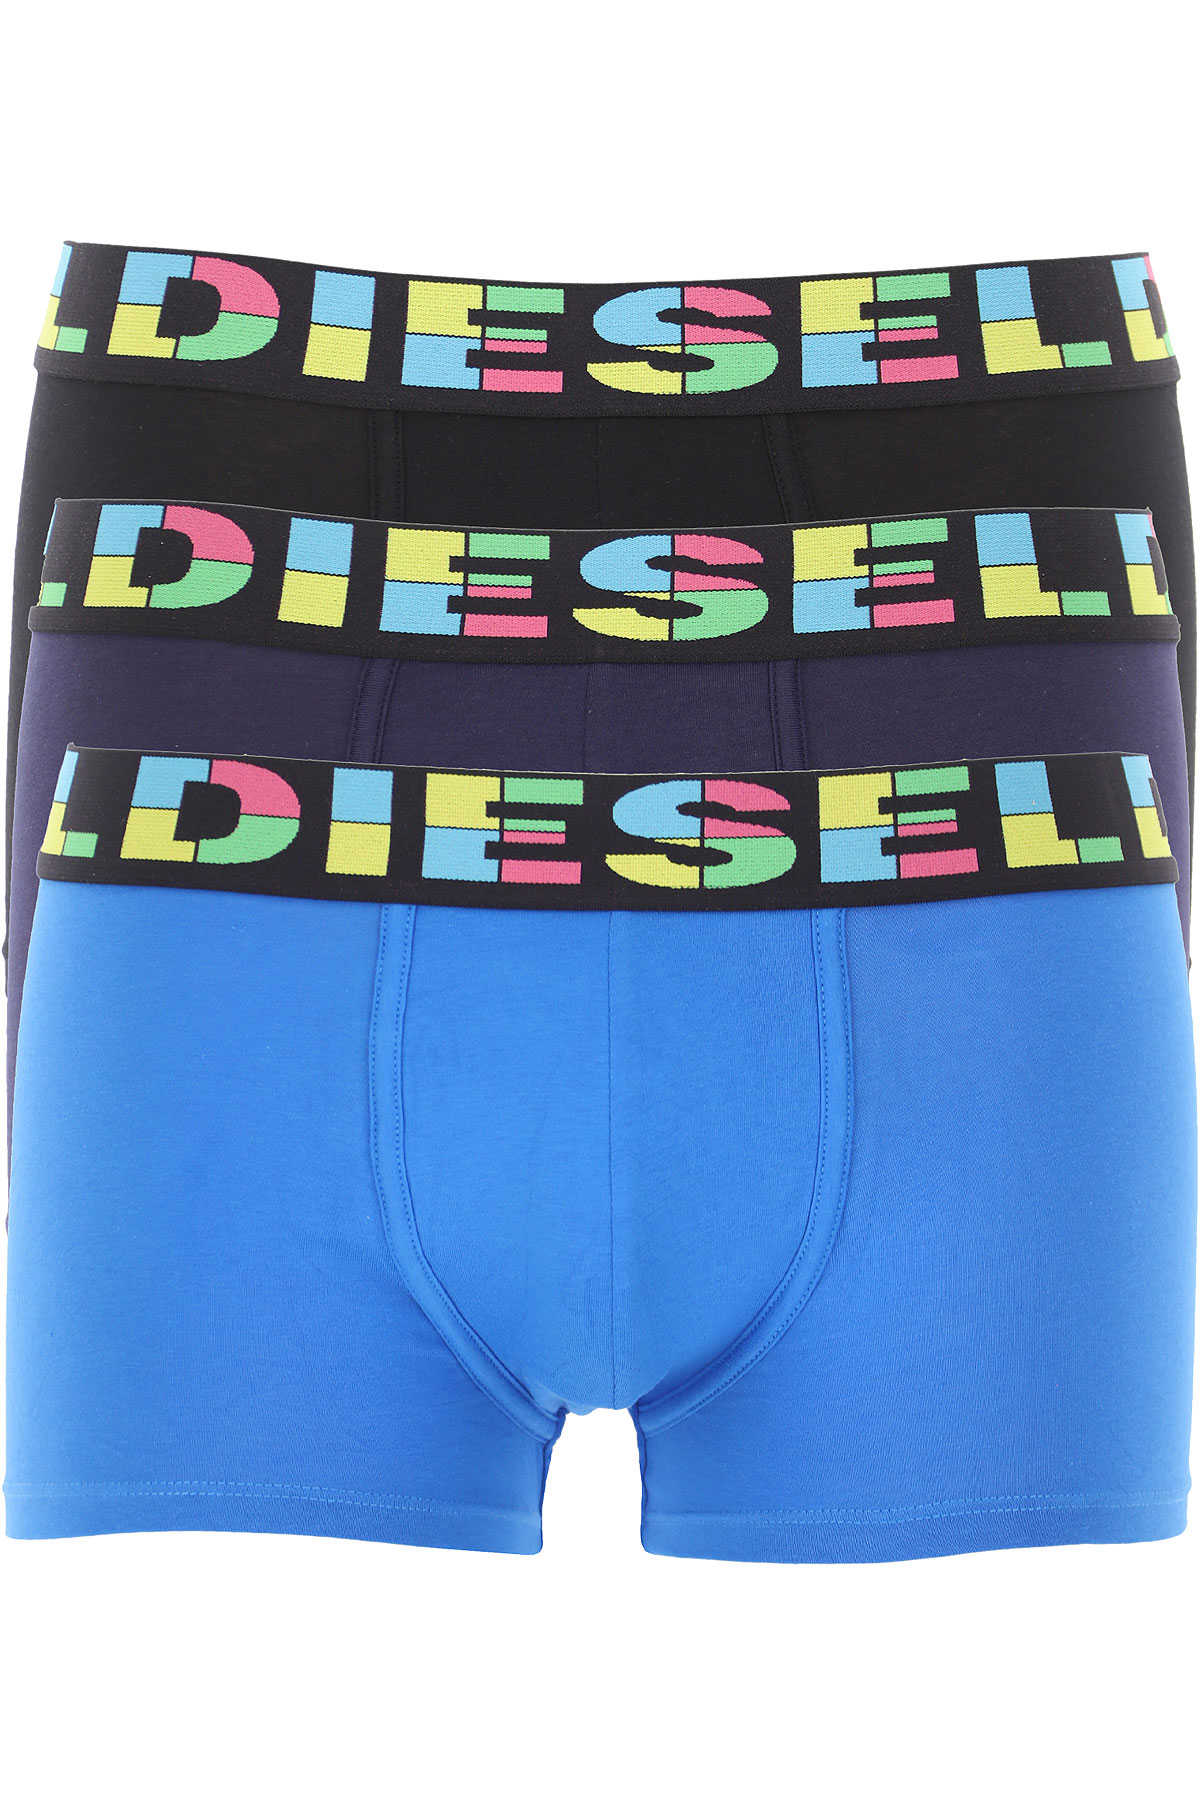 Mens Underwear Diesel, Style code: 00st3v-0bdar-e5349